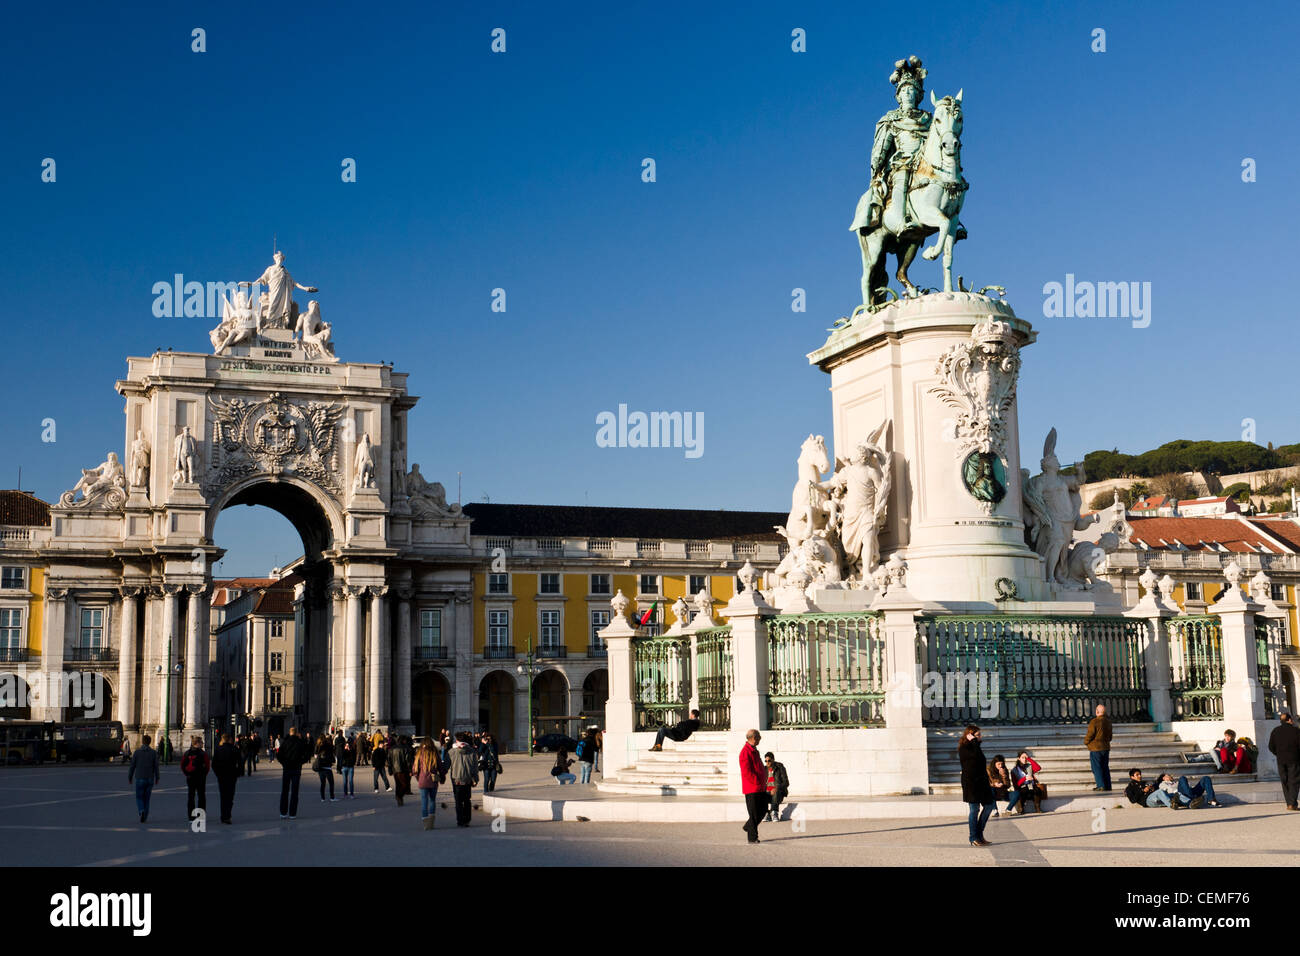 Triumphal arch and statue of King José I at Praça do Comércio, Lisbon, Portugal. Stock Photo